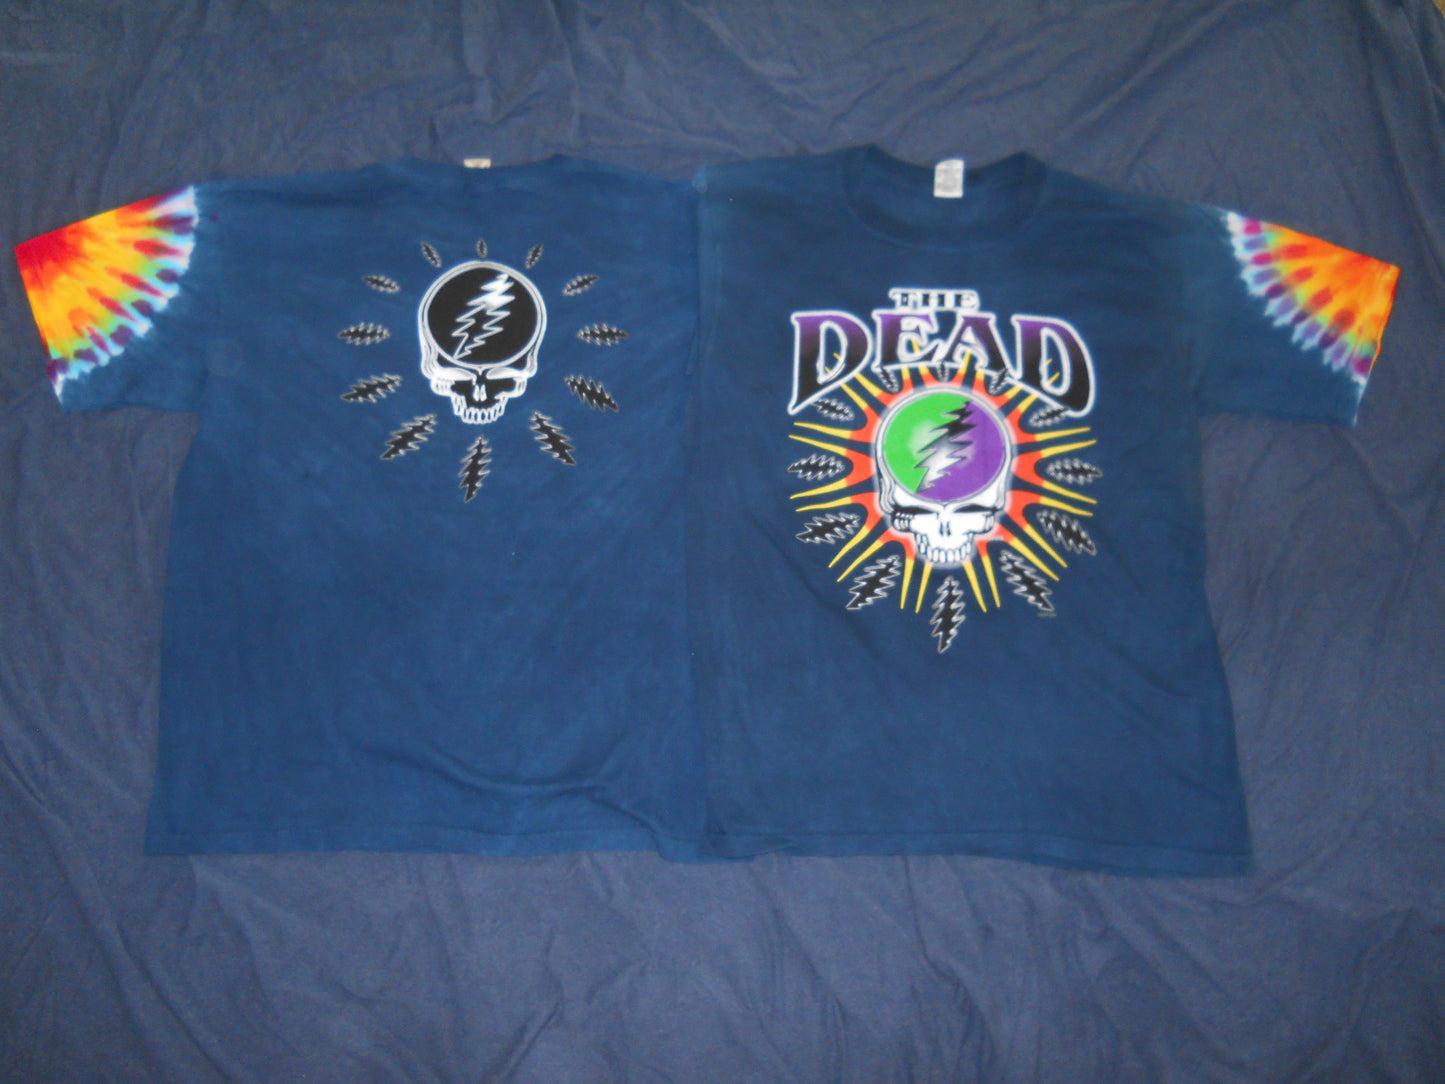 Grateful Dead "The Dead" Steal Your Lightning Tie Dye T-Shirt - HalfMoonMusic